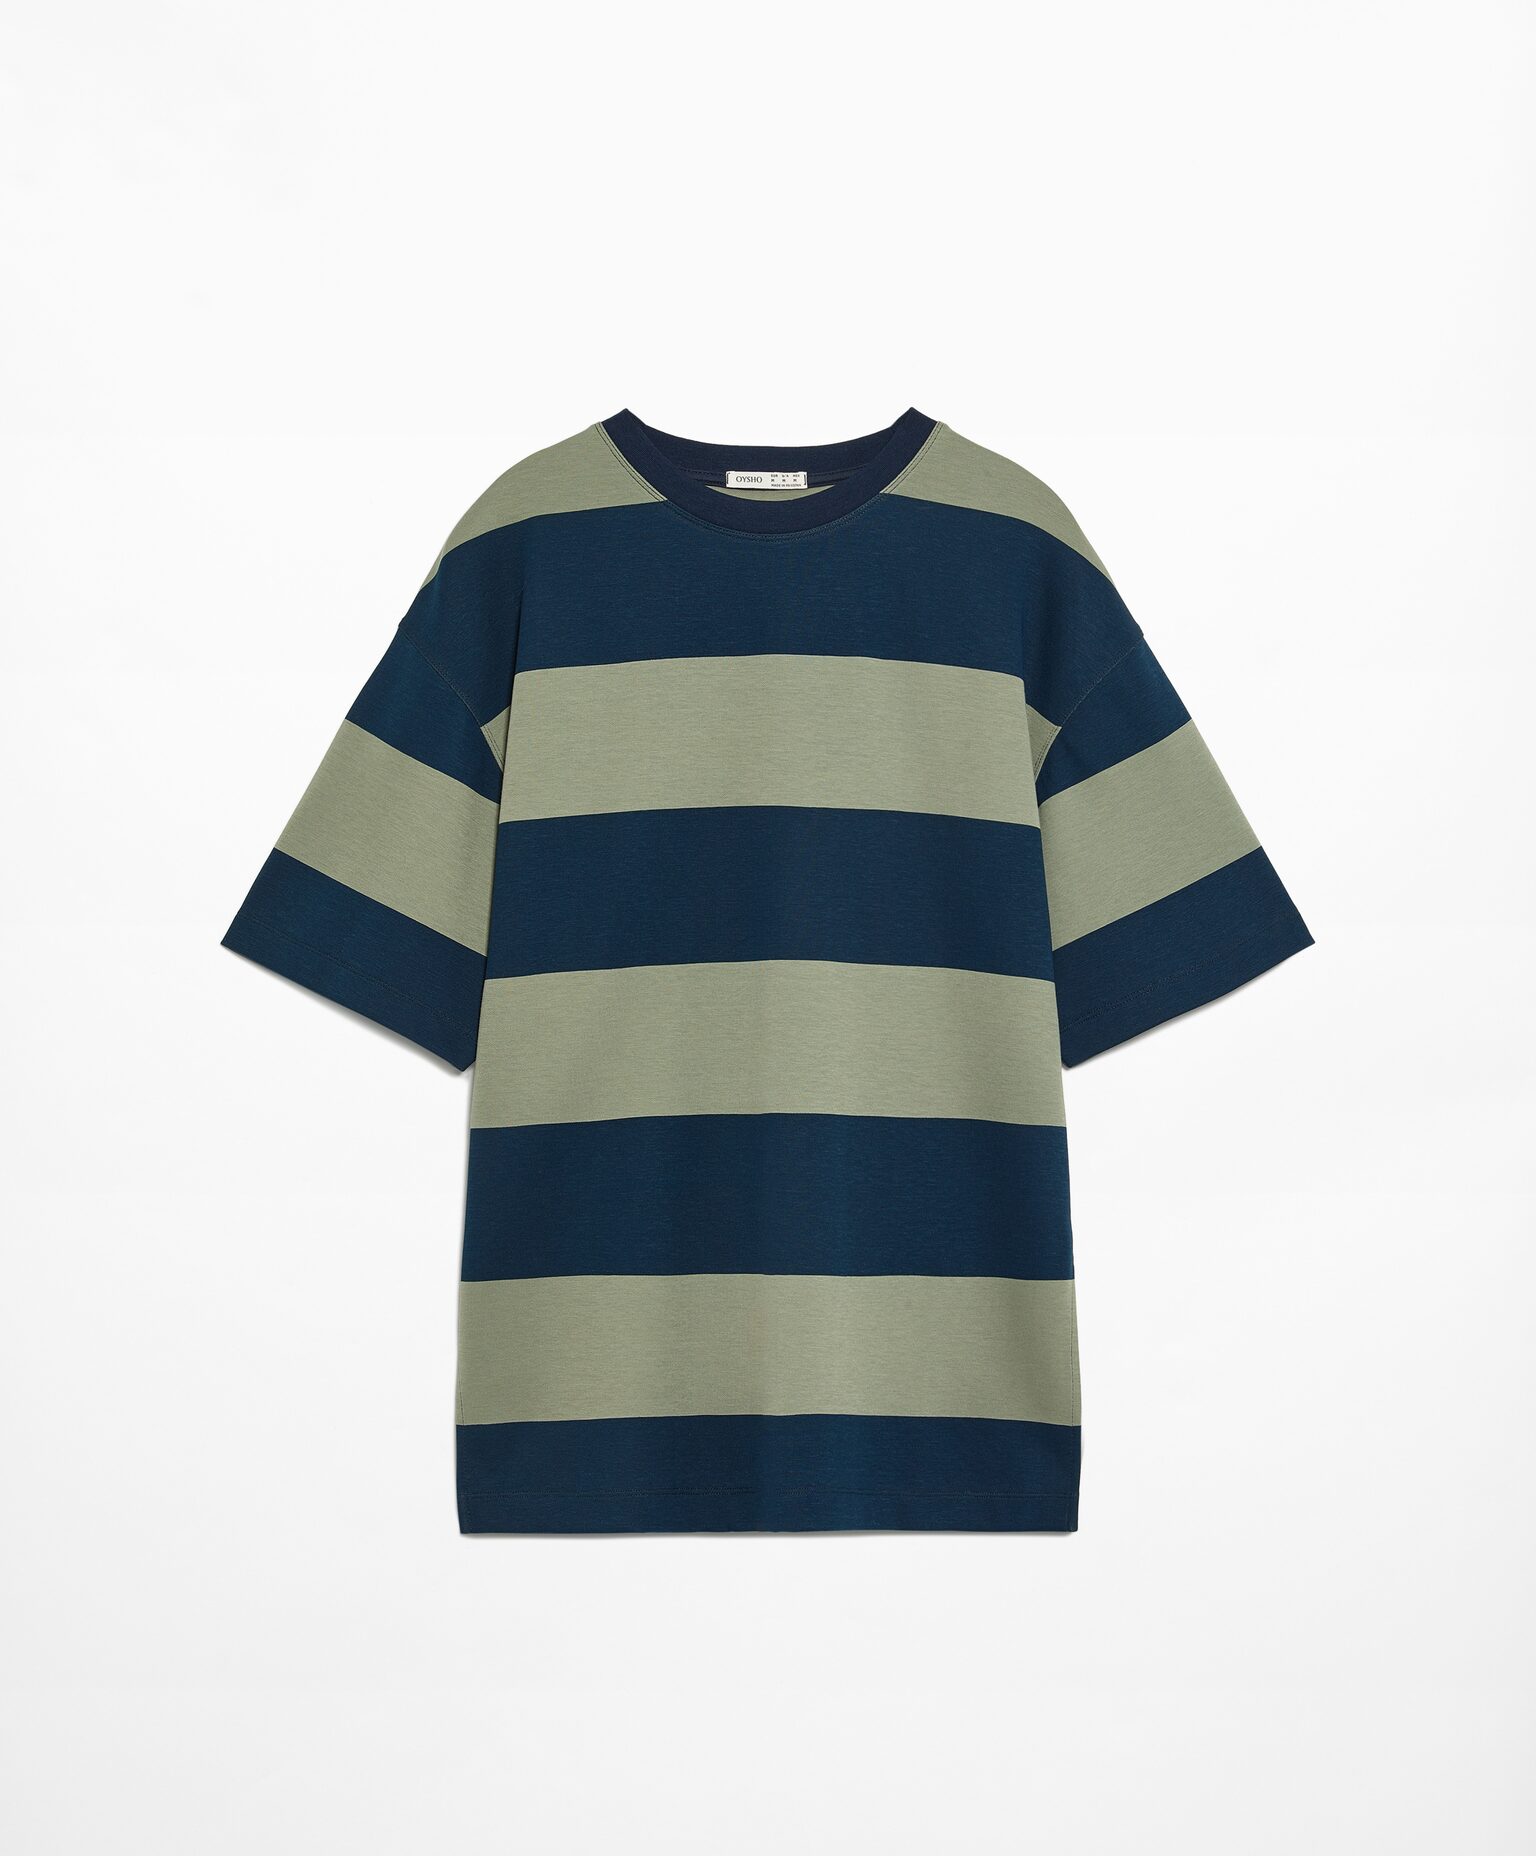 Футболка Oysho Striped Cotton Blend Short, синий/зеленый джоггеры oysho striped soft knit серо зеленый